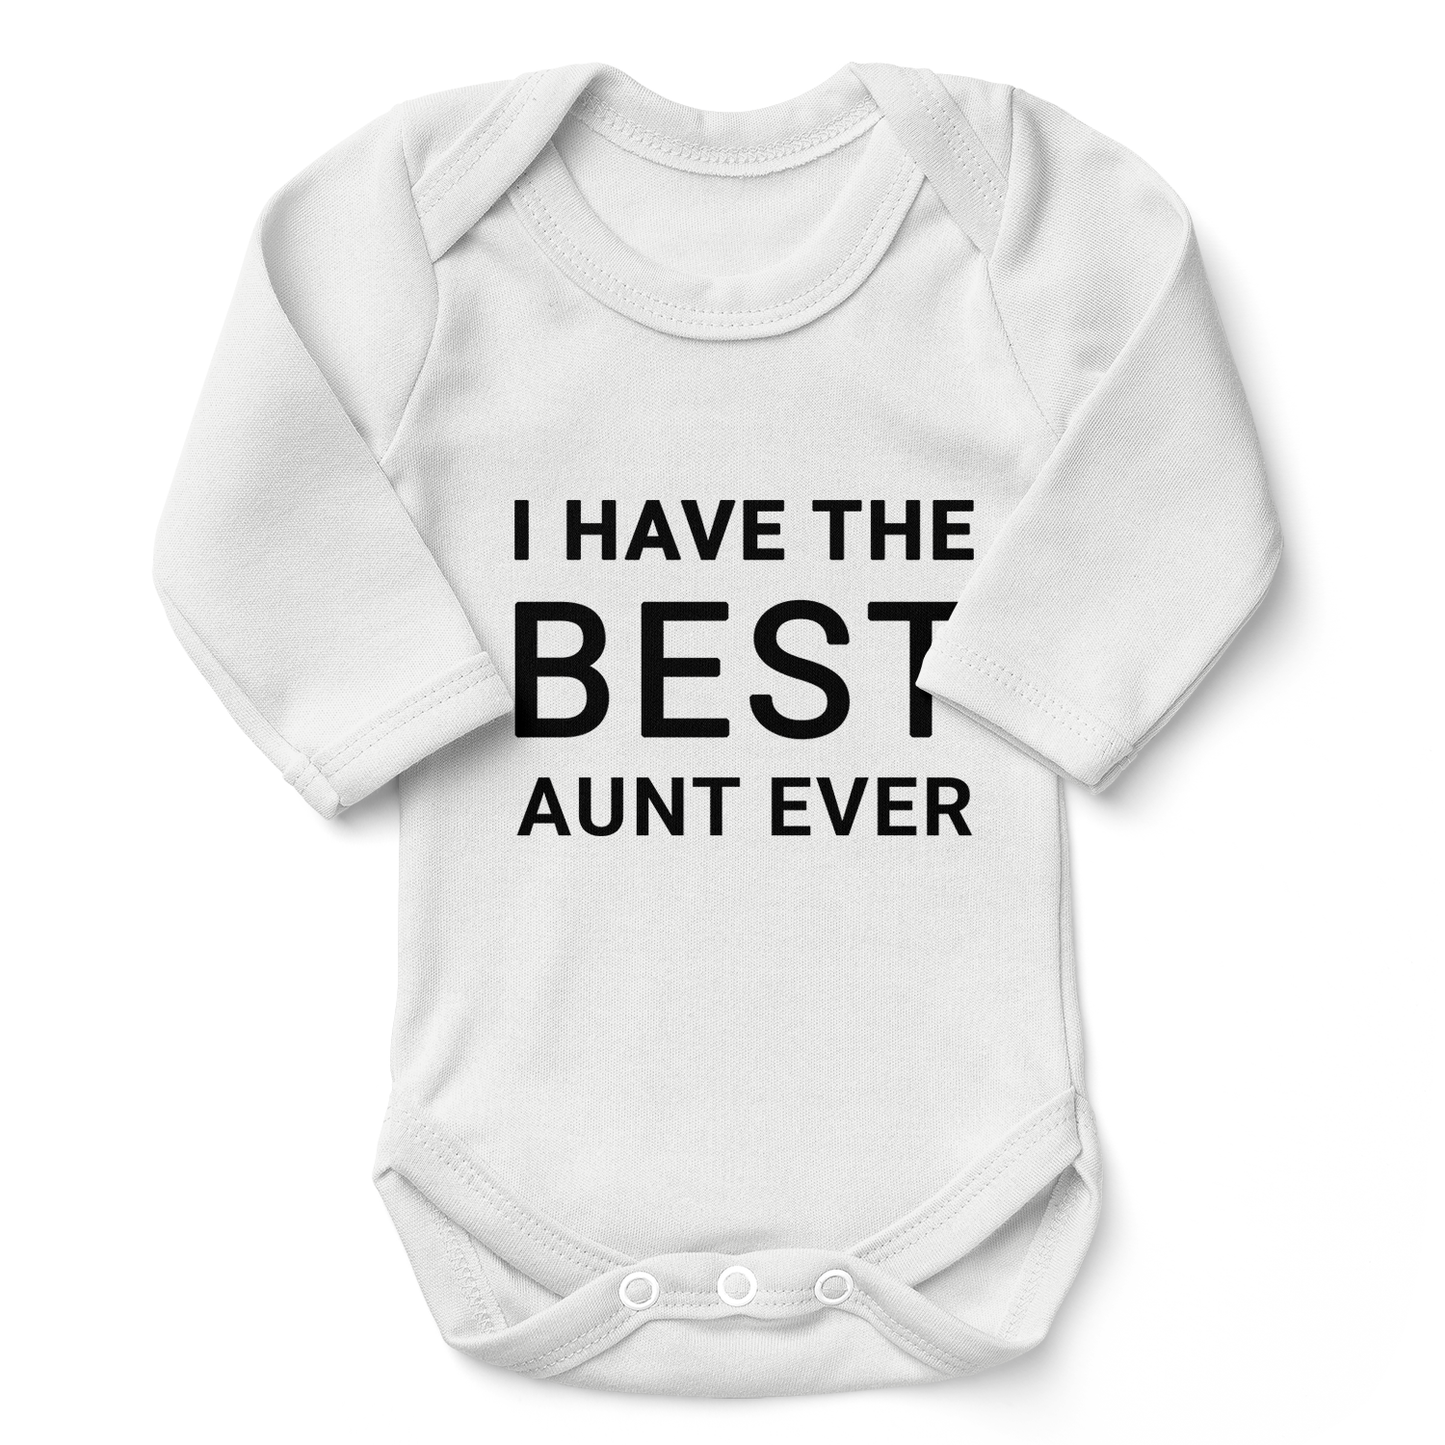 Endanzoo Organic Baby Bodysuit - Best Aunt Ever